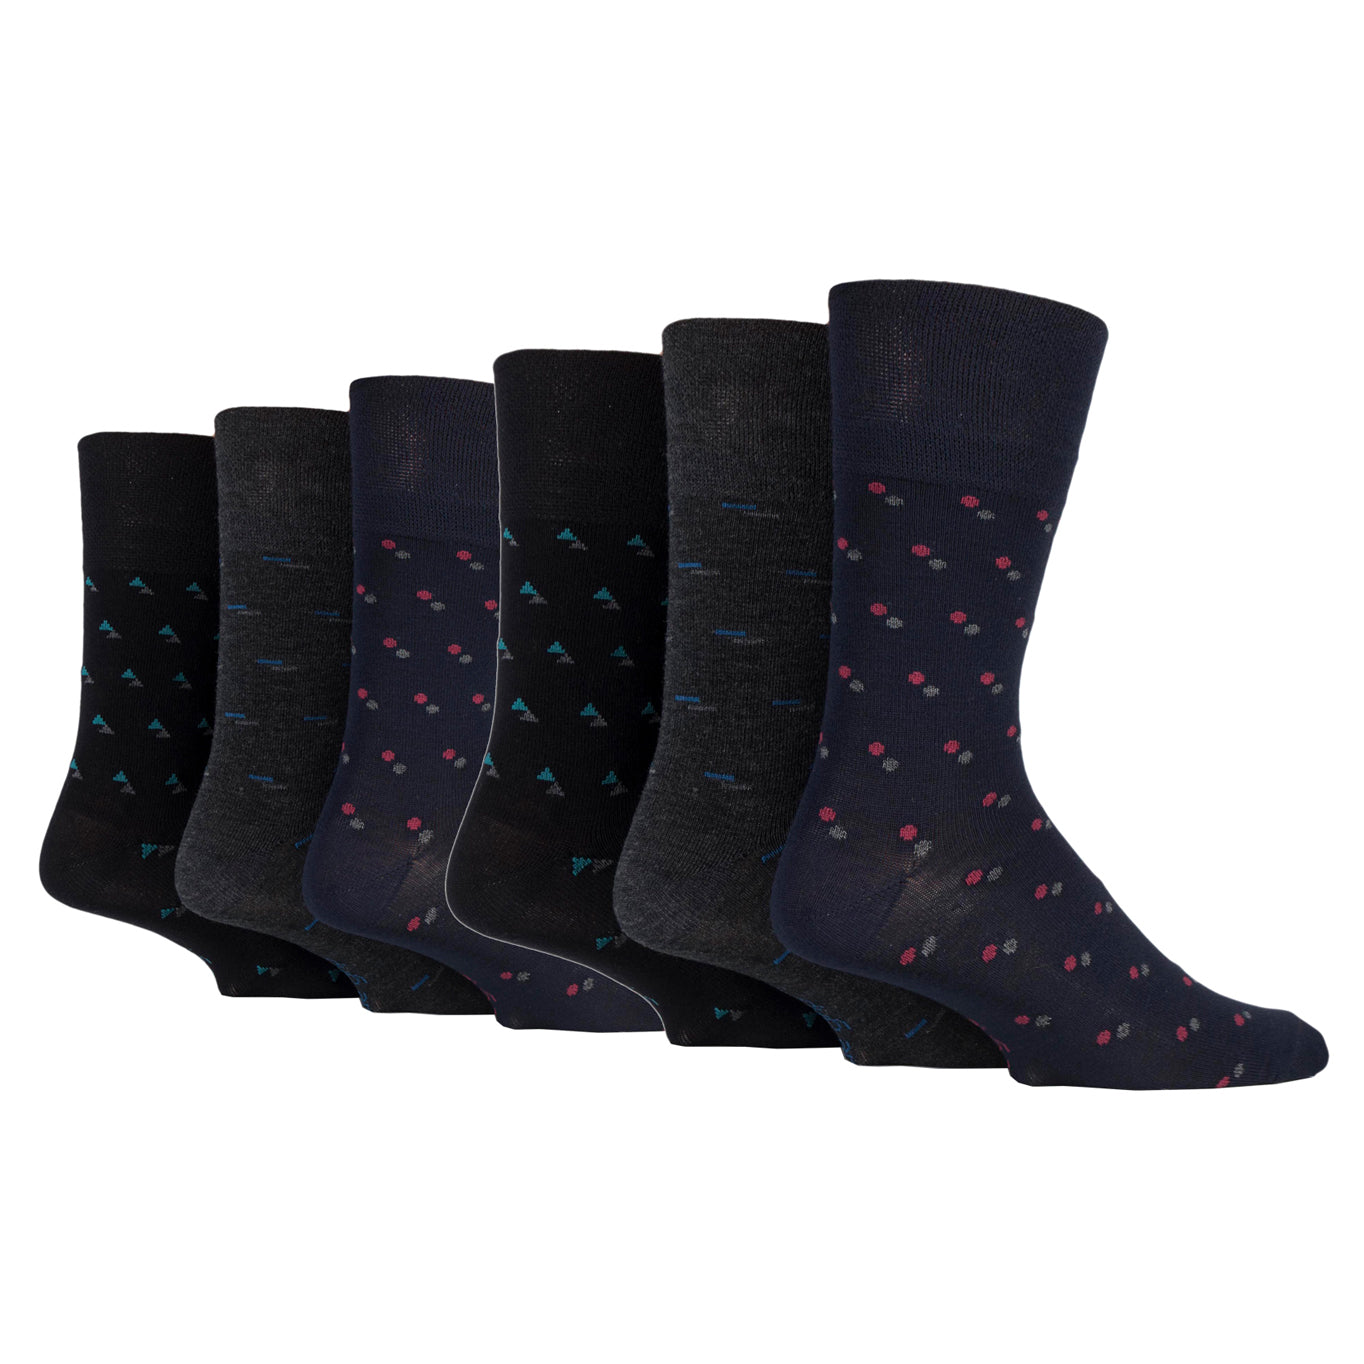 6 Pairs Men's Gentle Grip Bamboo Socks - Suit Black/Navy/Charcoal